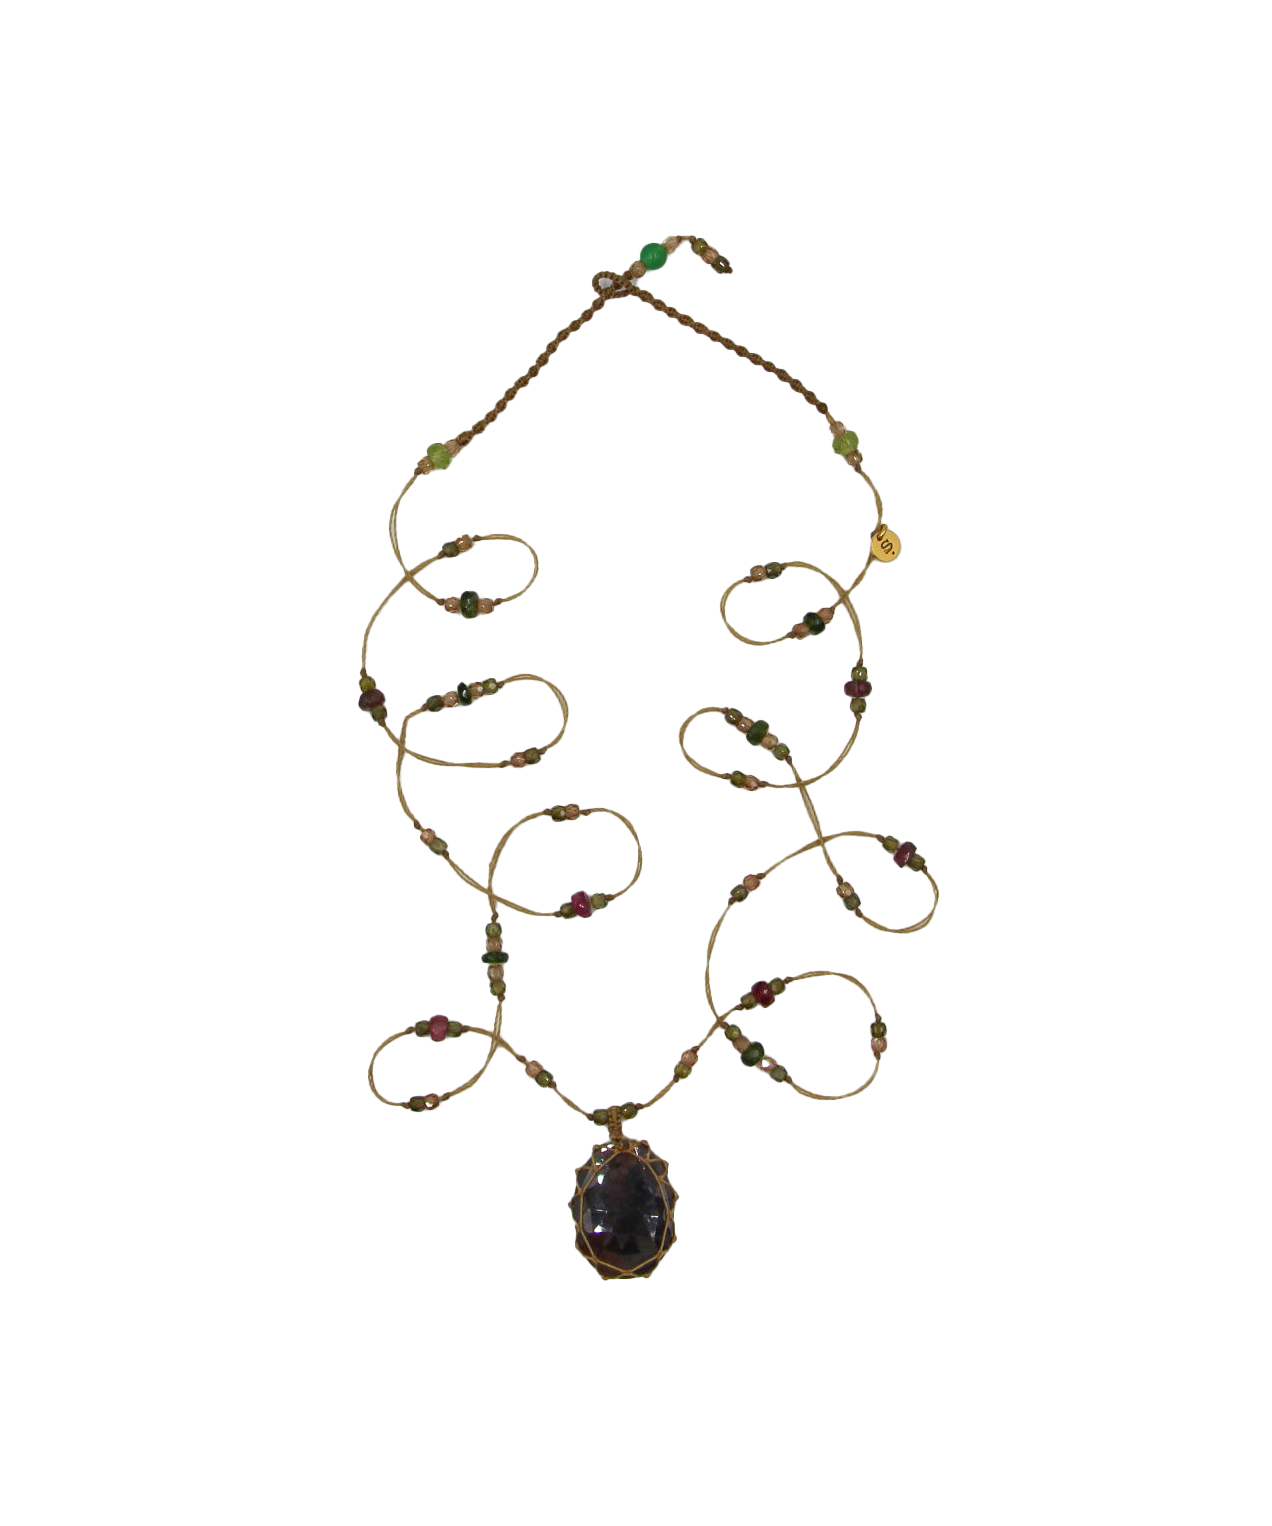 Tibetan Long Necklace - Brown Corundum - Mix Multi Stones - Beige Thread